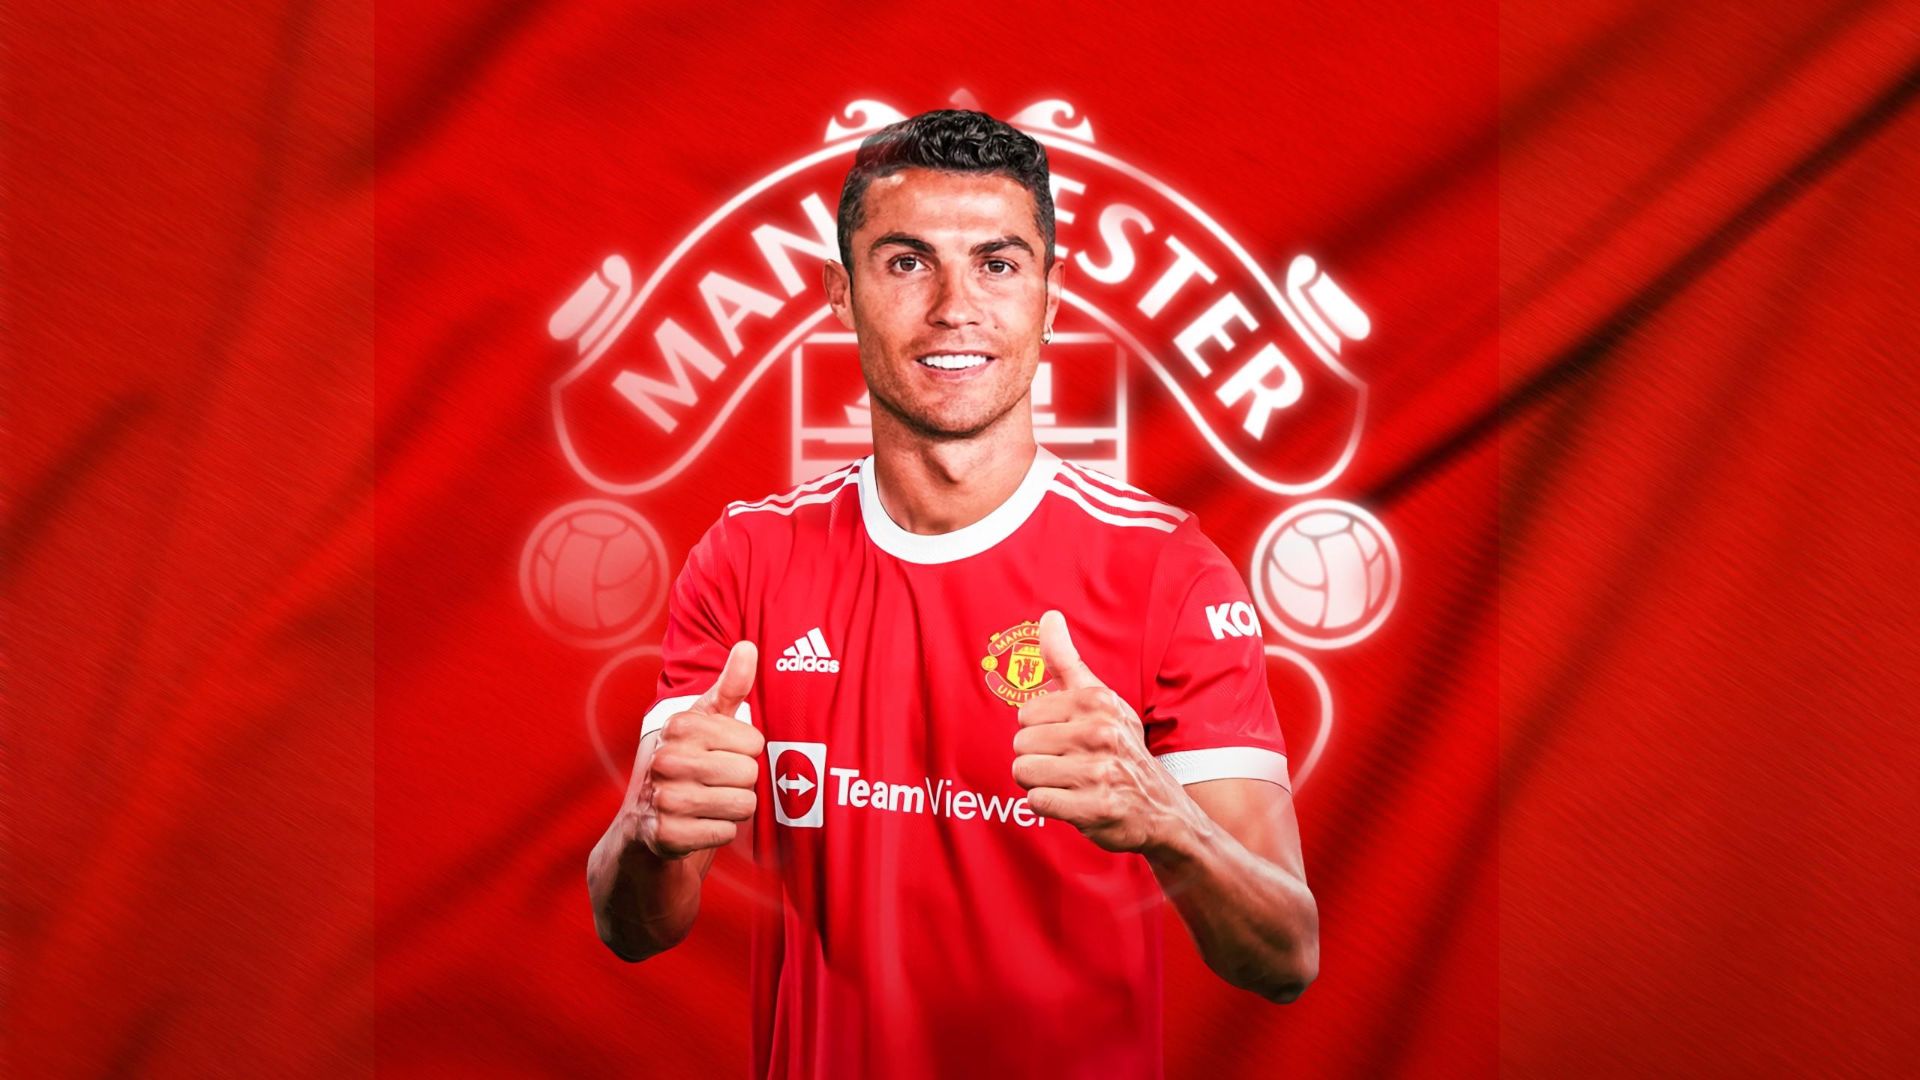 Ronaldo Manchester United Wallpaper Best Wallpaper Download [HD + 4K]